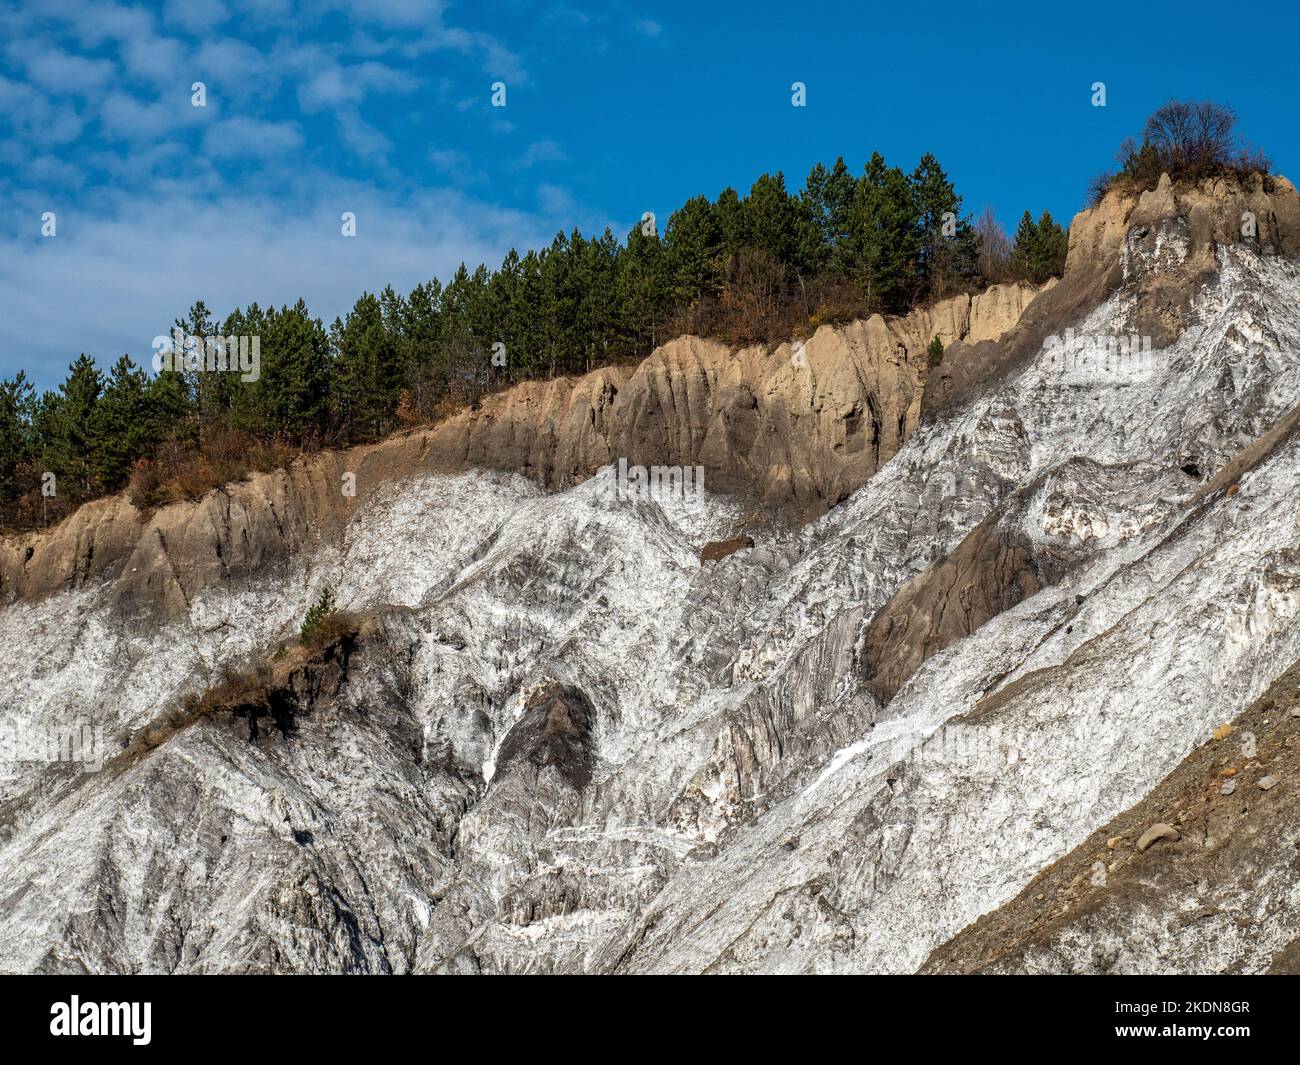 salt hills and canyon, Lopatari village, Buzau county, Romania Stock Photo